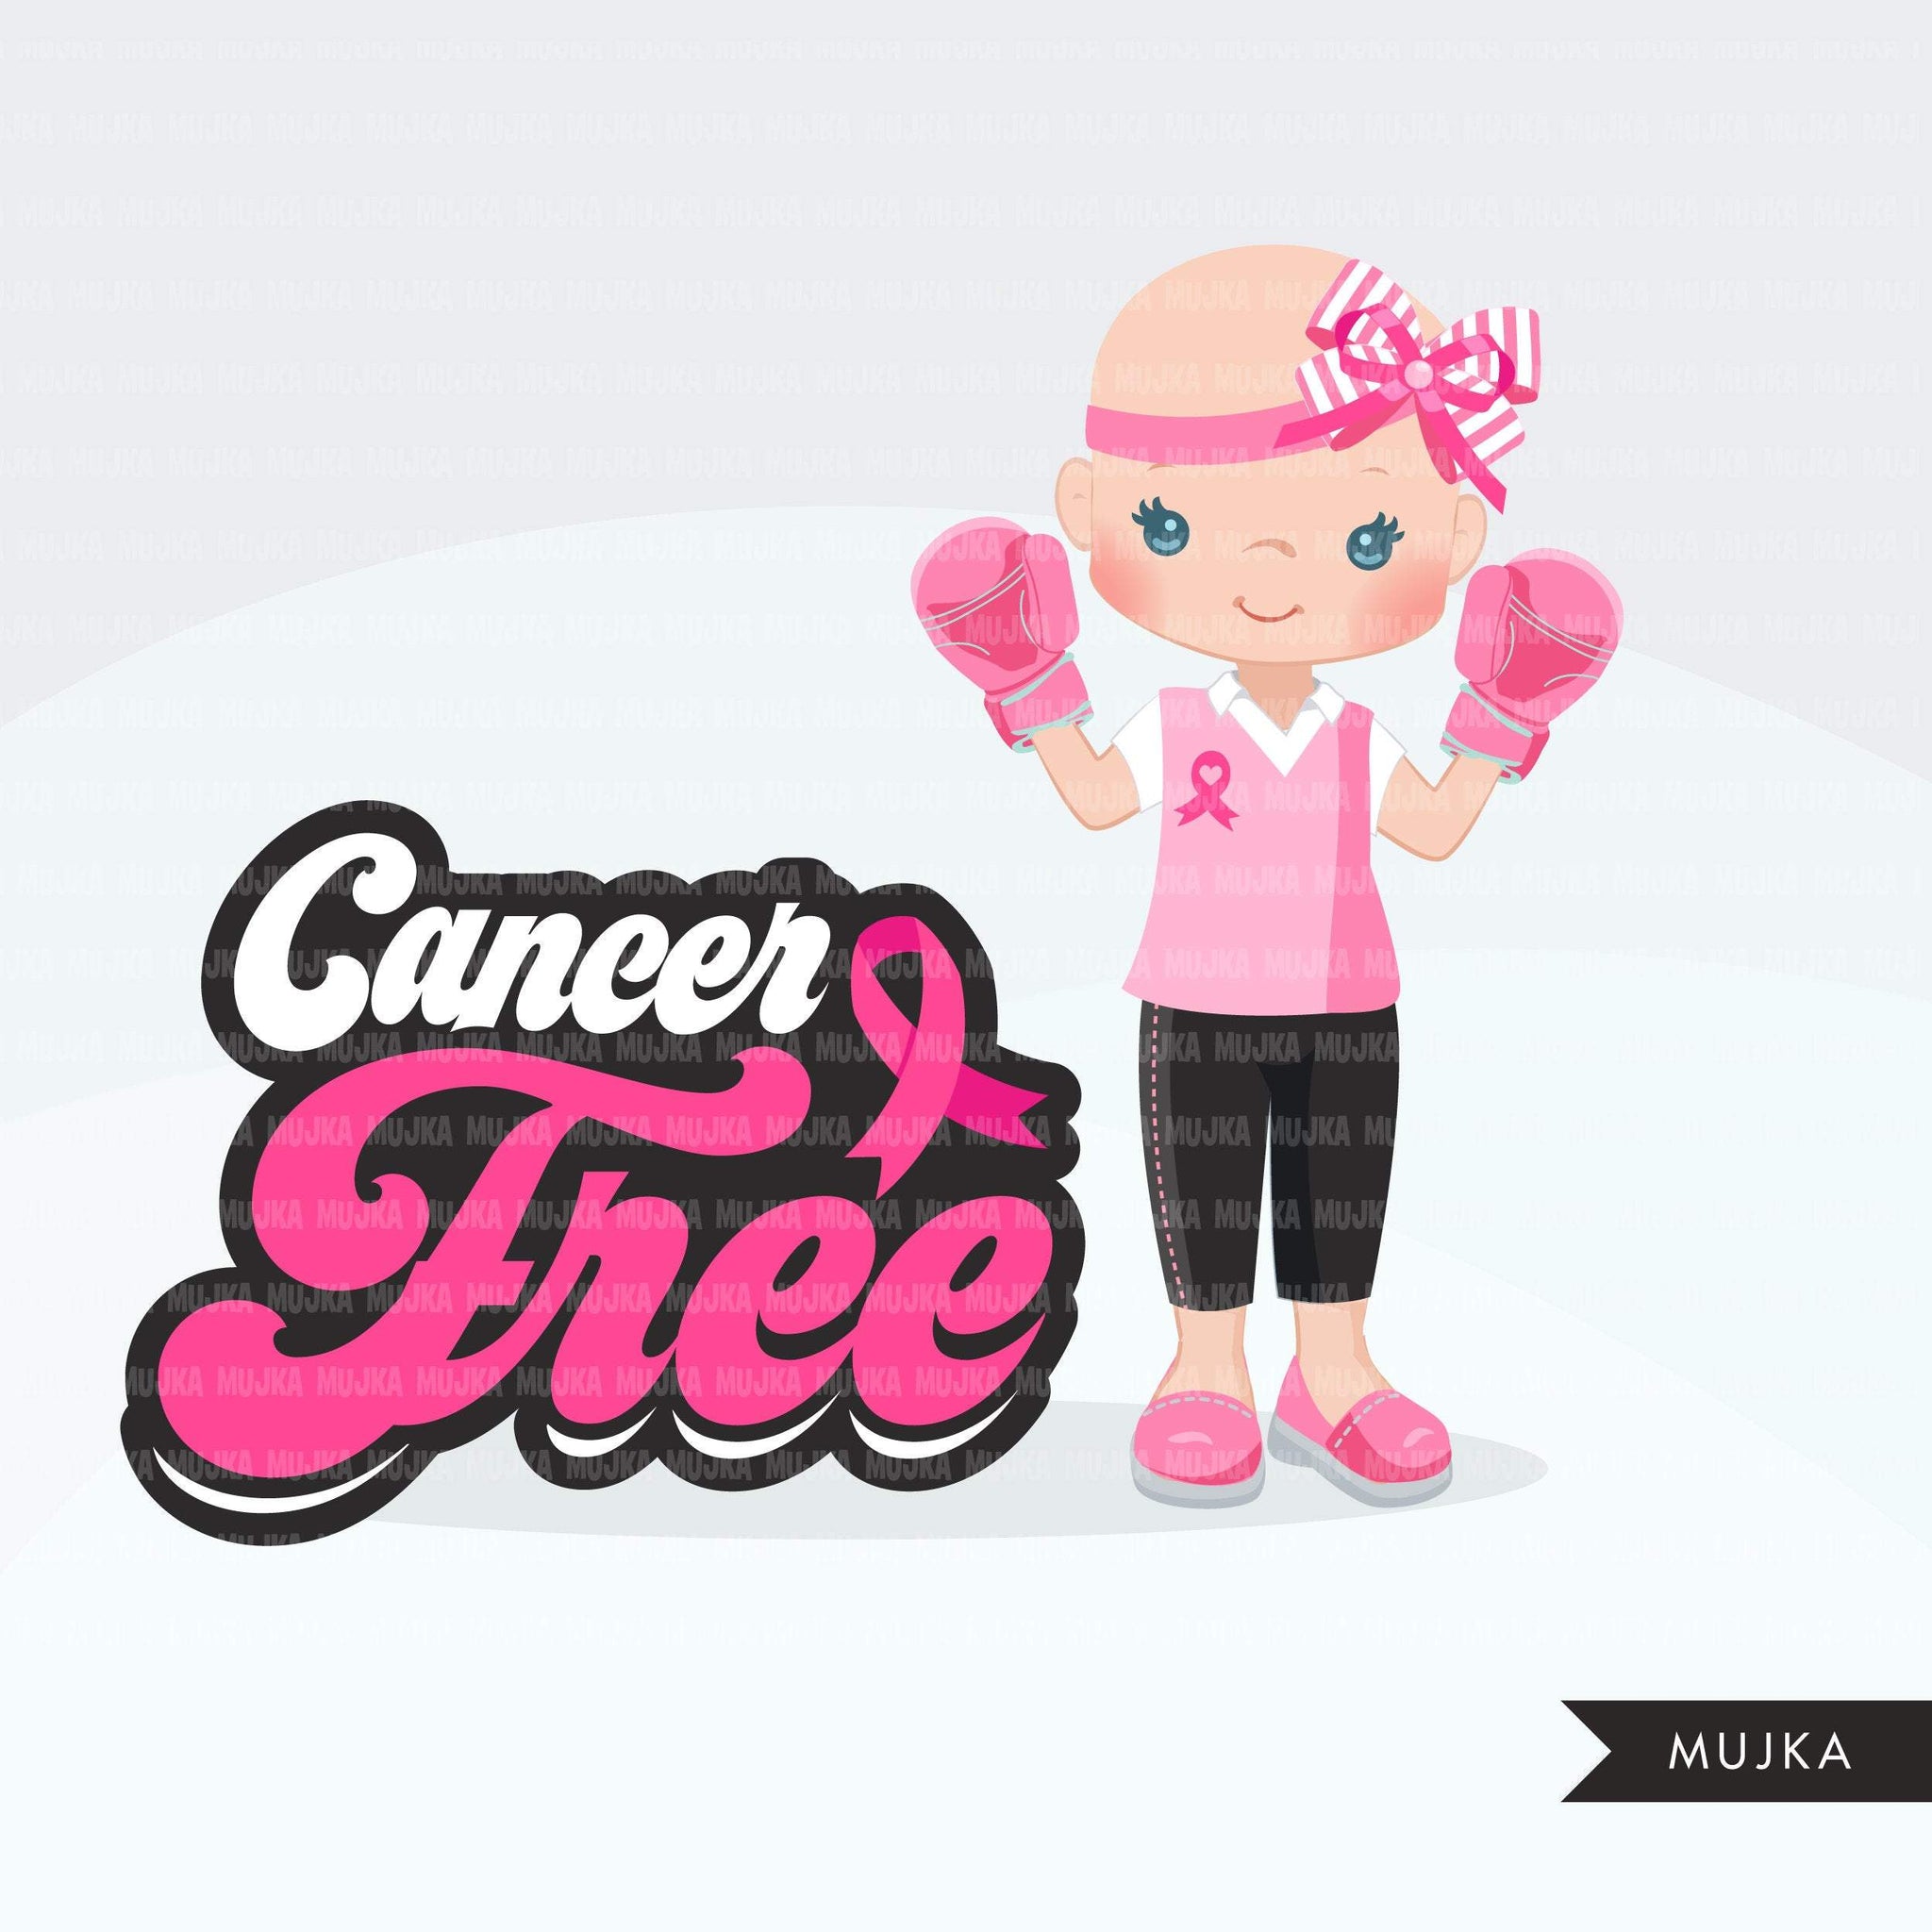 Pink bra breast cancer awareness banner concept Vector Image